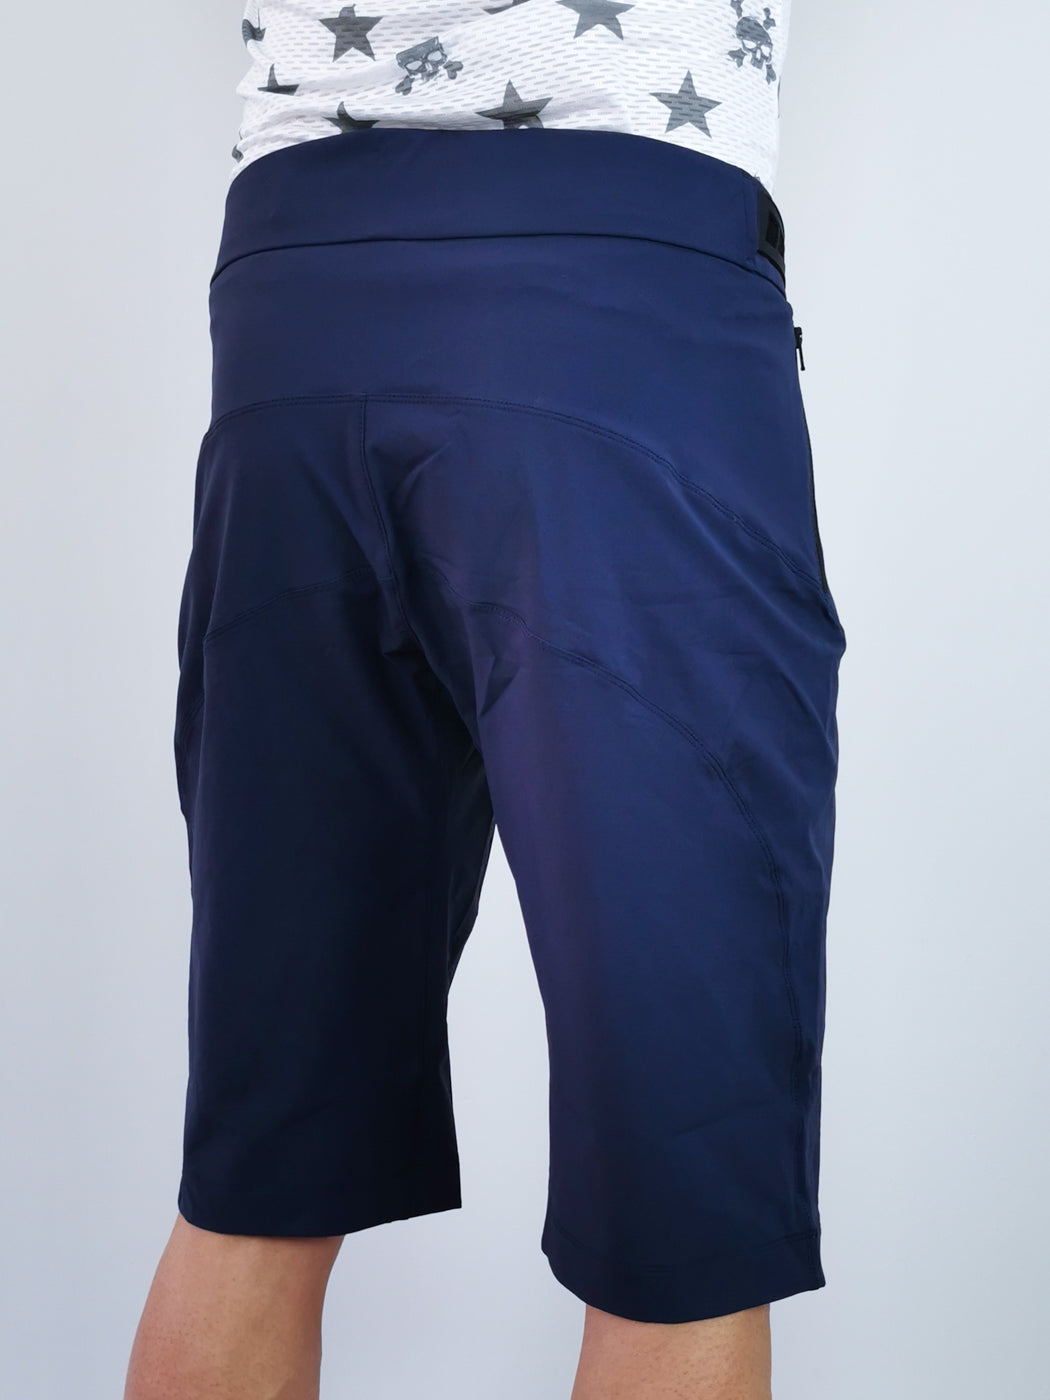 Grit Off-Road Shorts - Blue